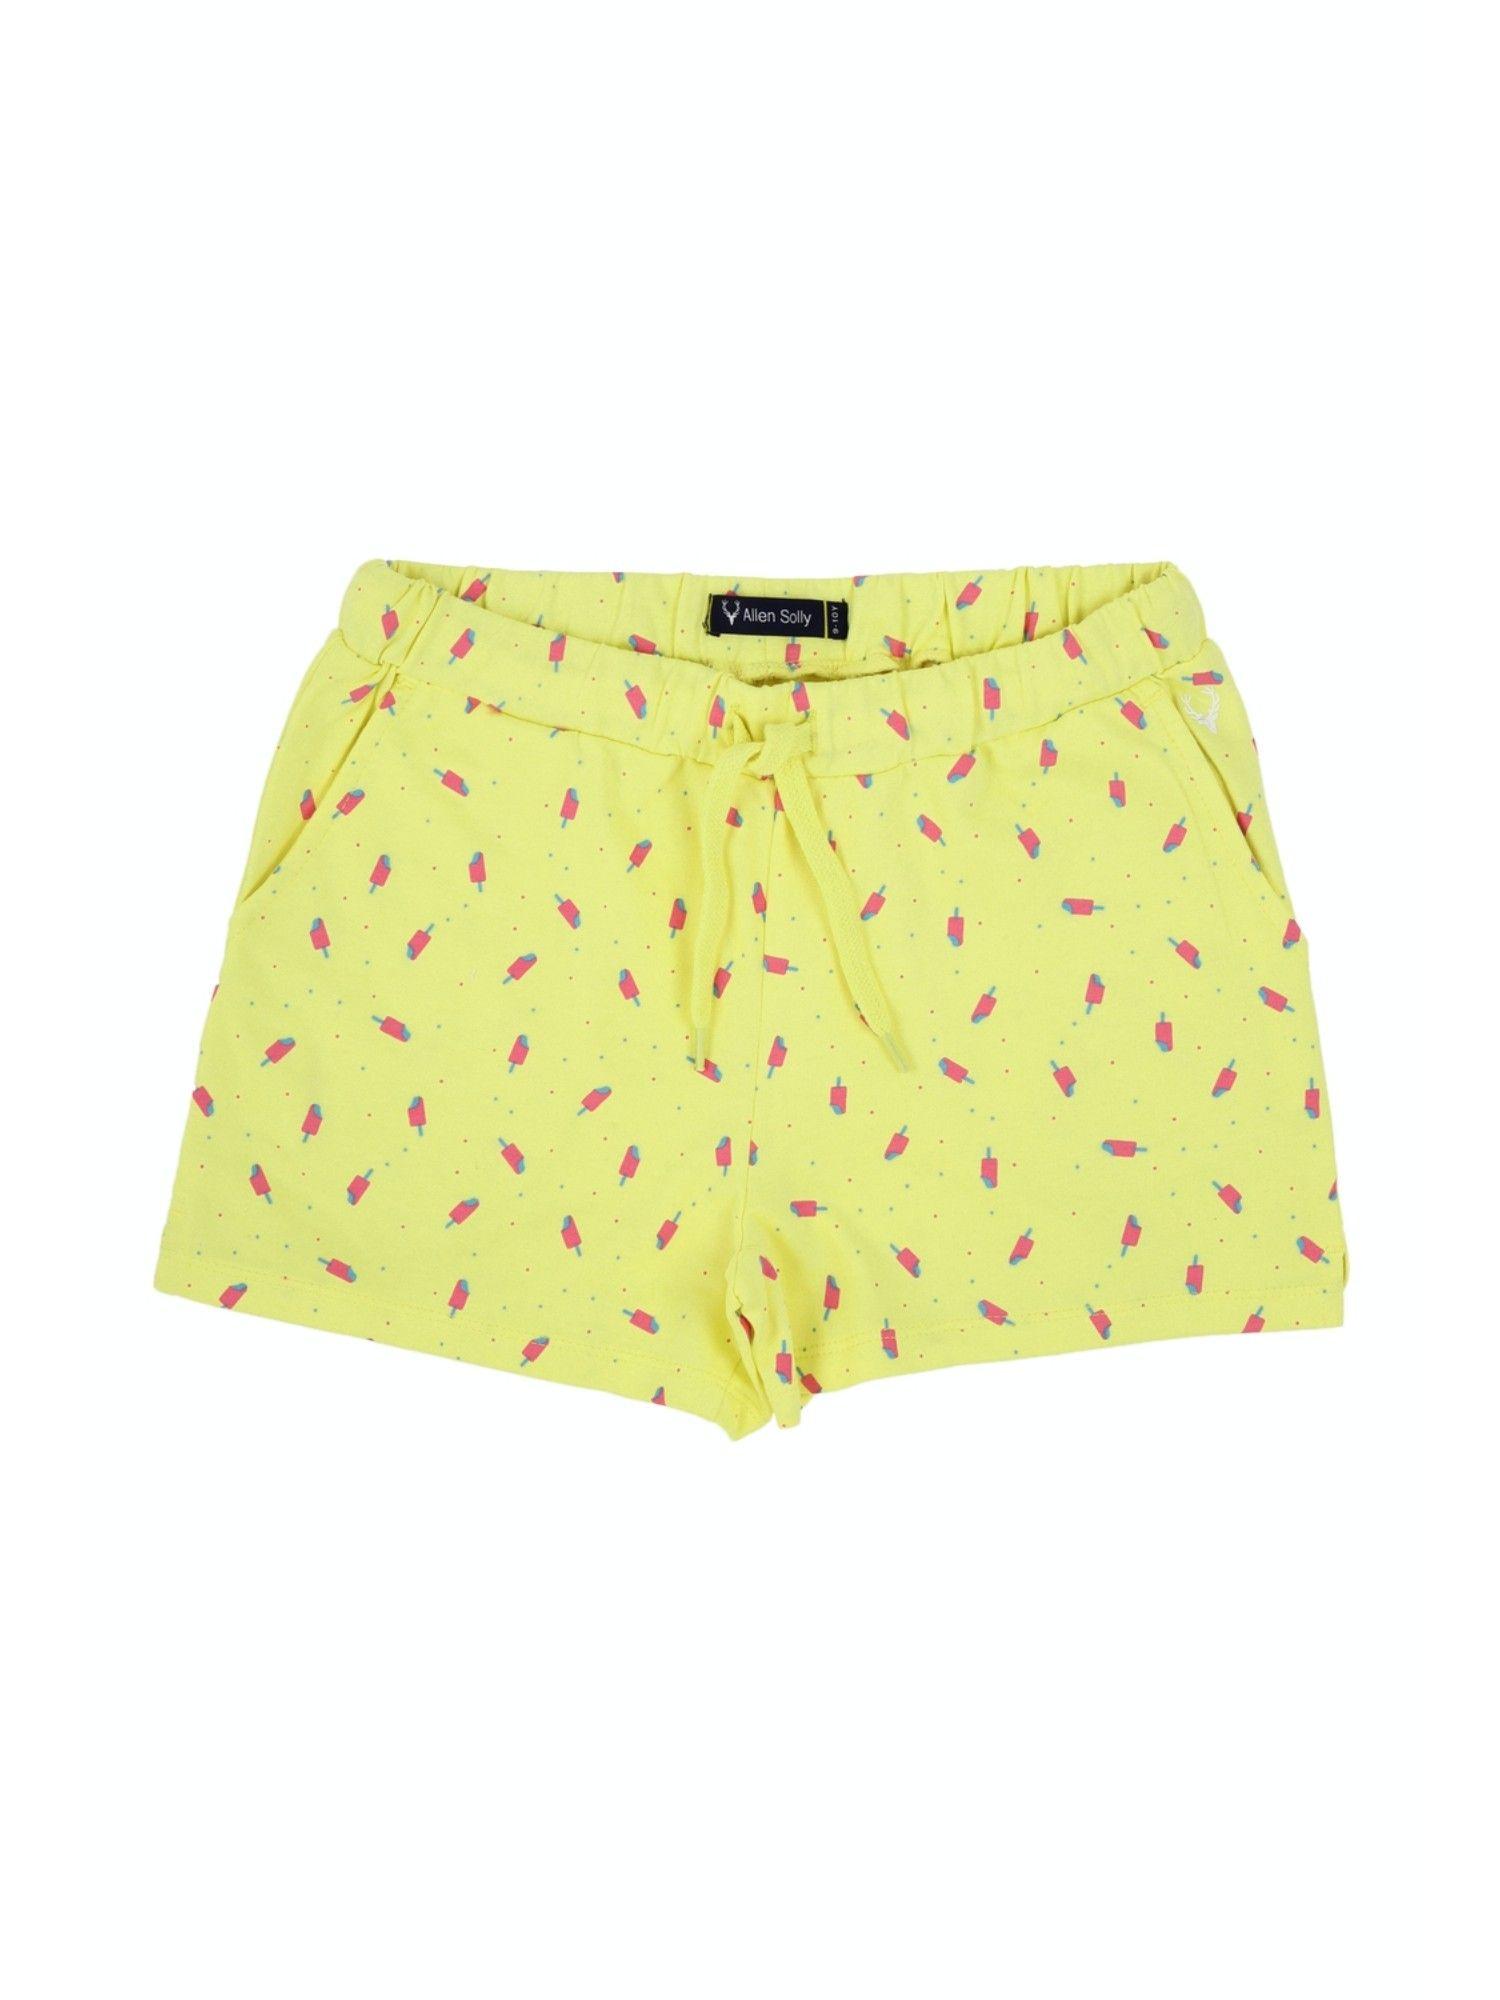 girls yellow printed shorts